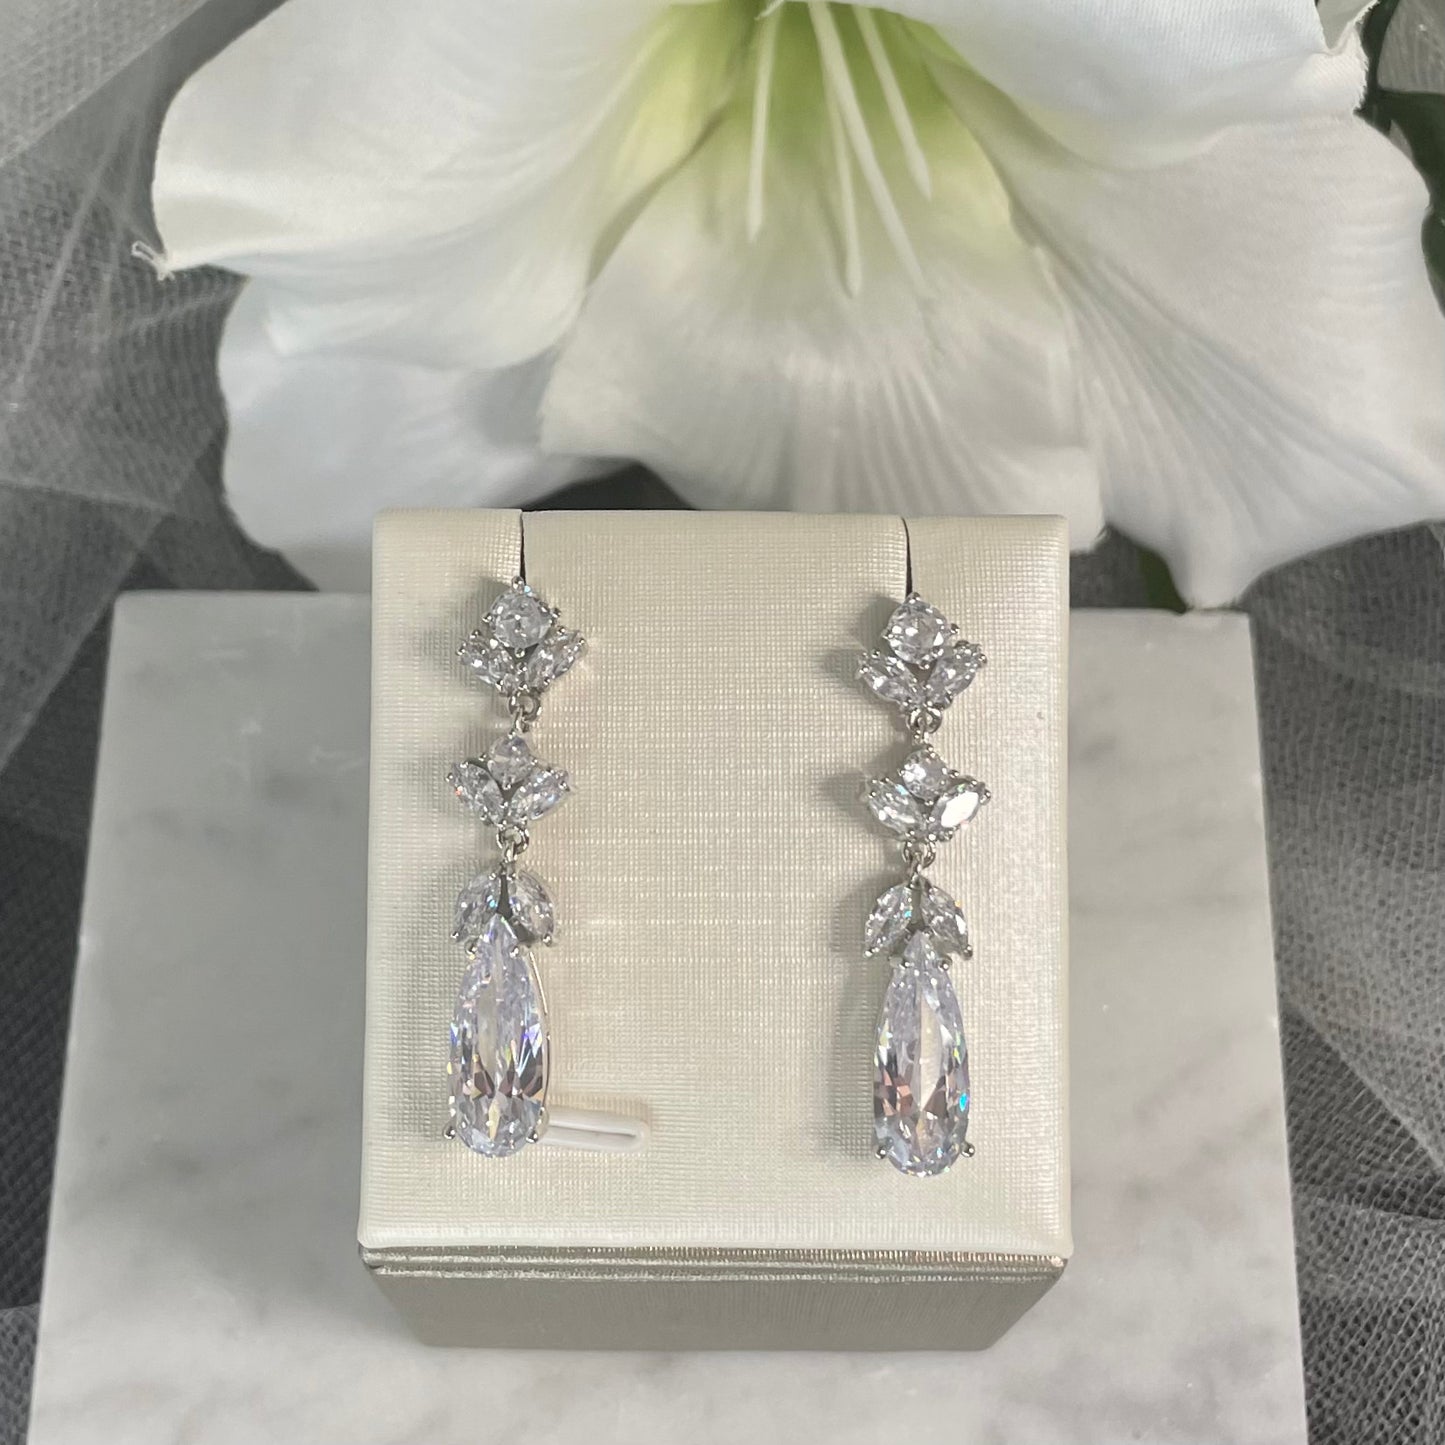 Edith Sterling Silver Bridal Earrings with Elegant Zircon Tassels - Divine Bridal